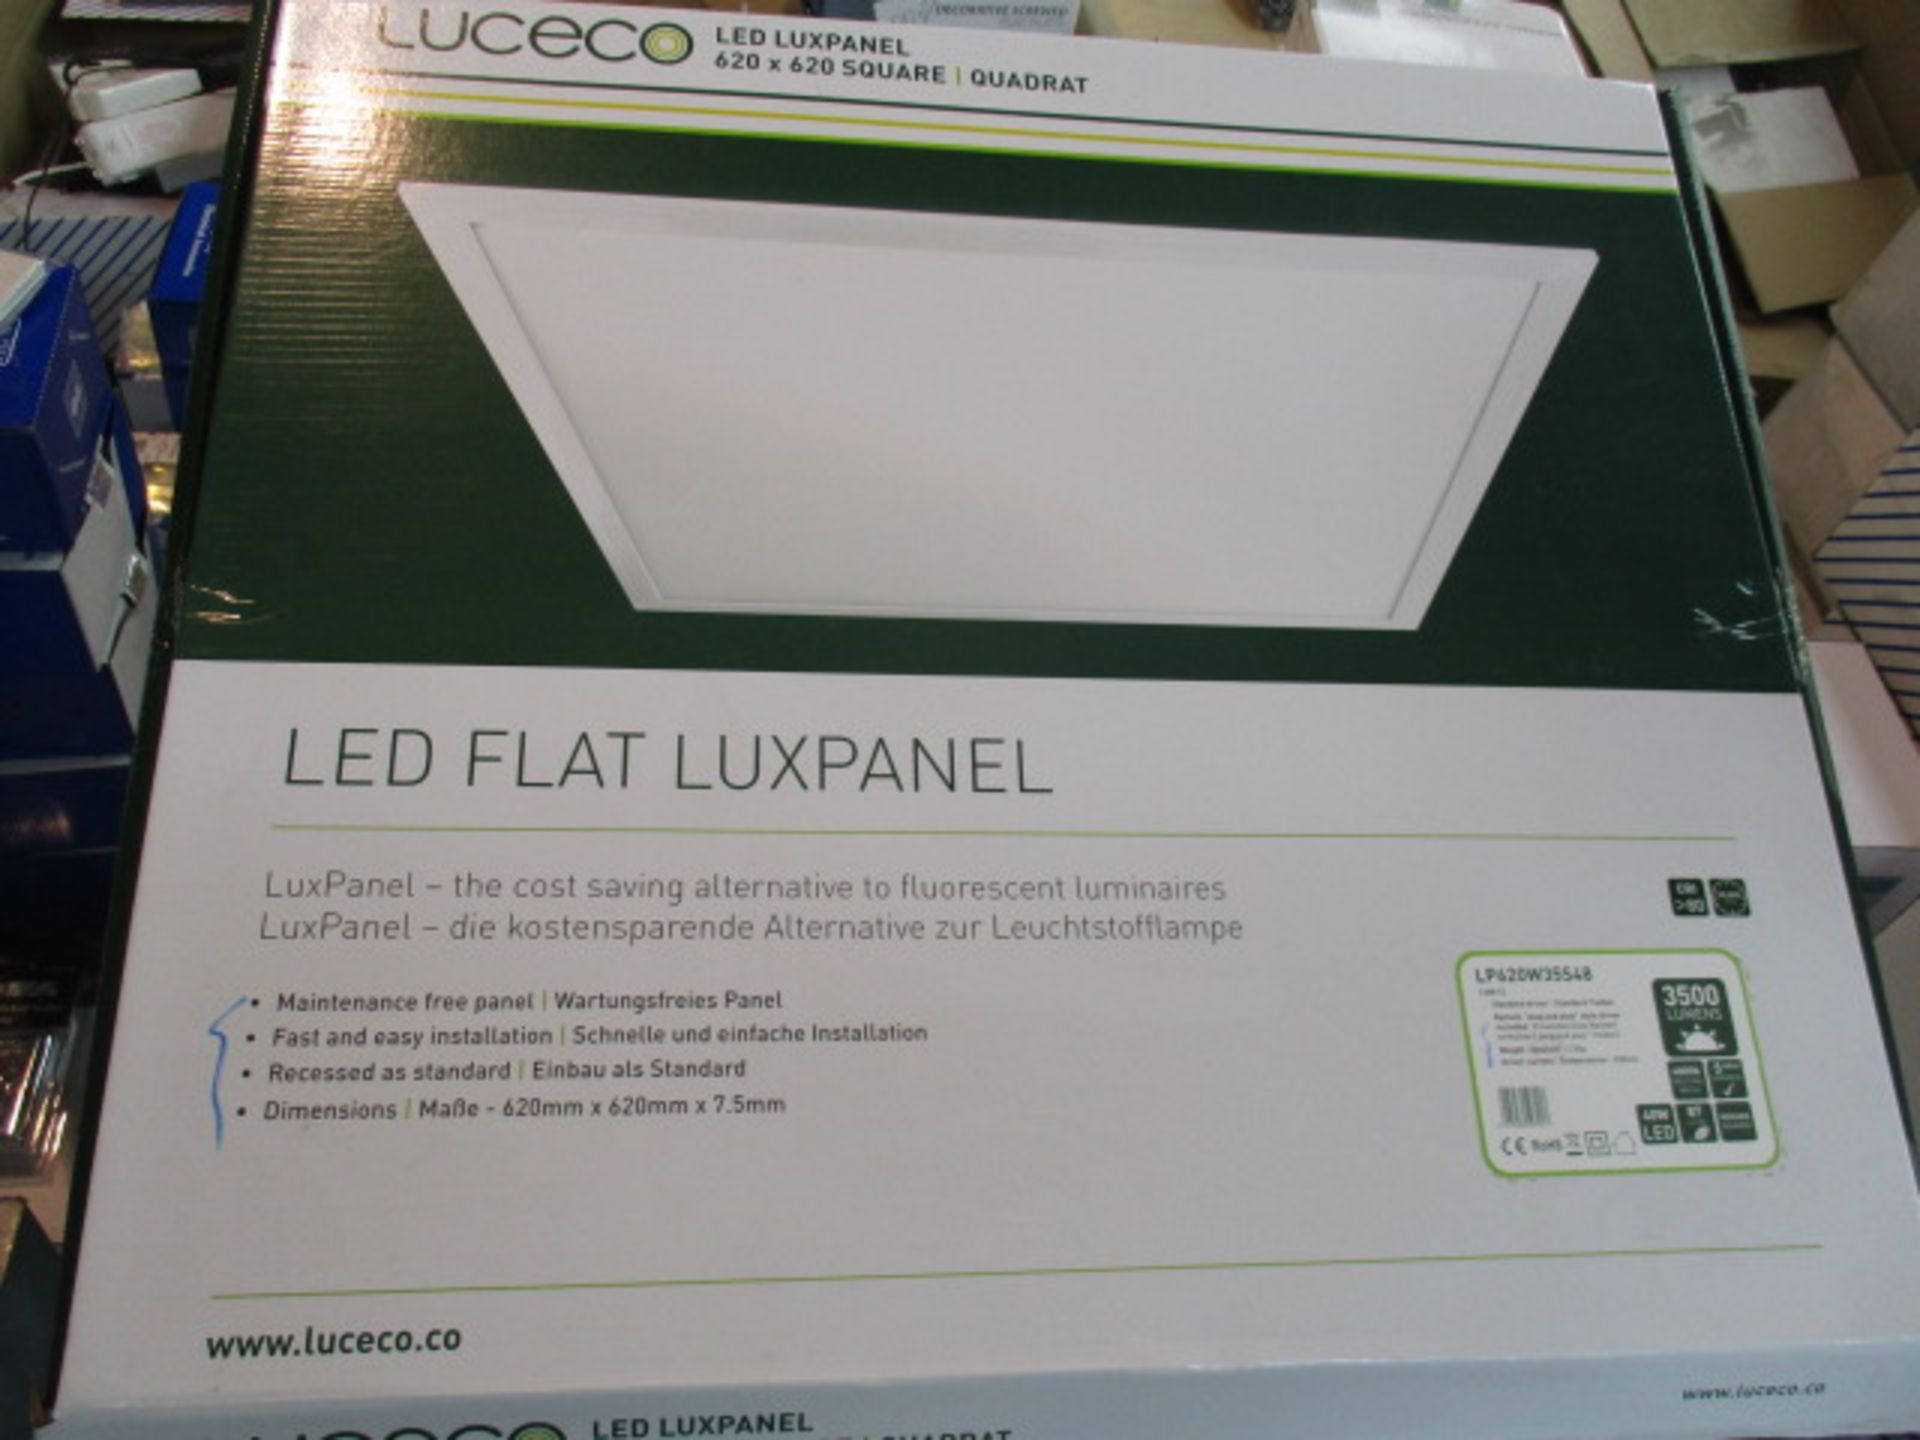 New & Sealed Luceco 620 x 620 LED flat panel - rrp £59.99 .